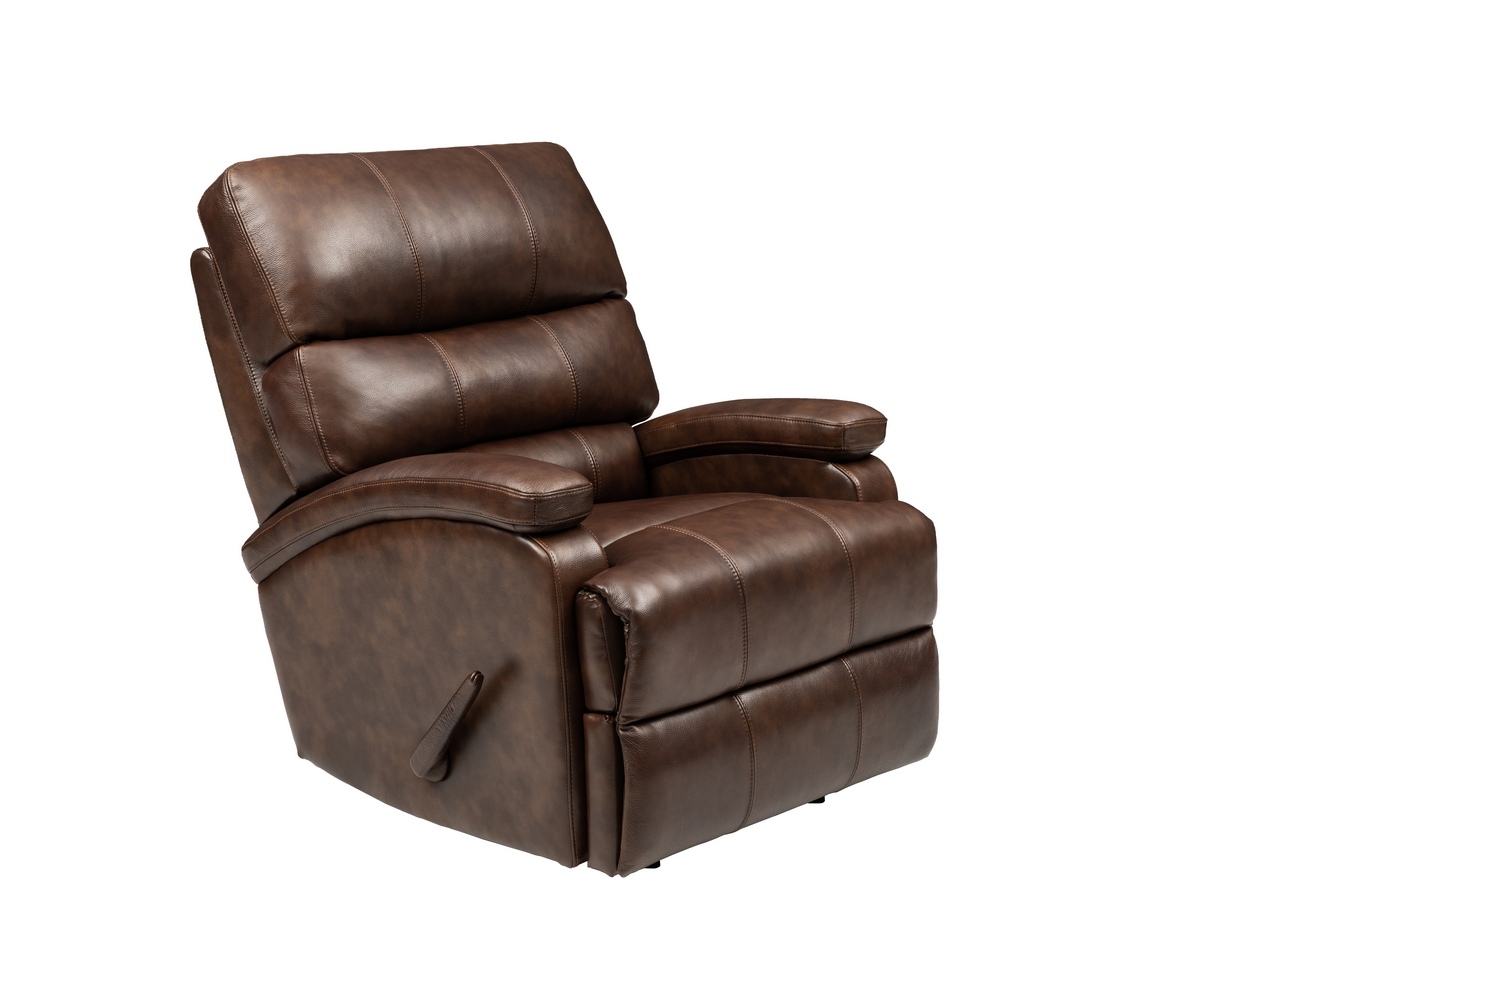 Barcalounger Detrick Rocker Recliner Chair - Wenlock Double Chocolate/Leather match